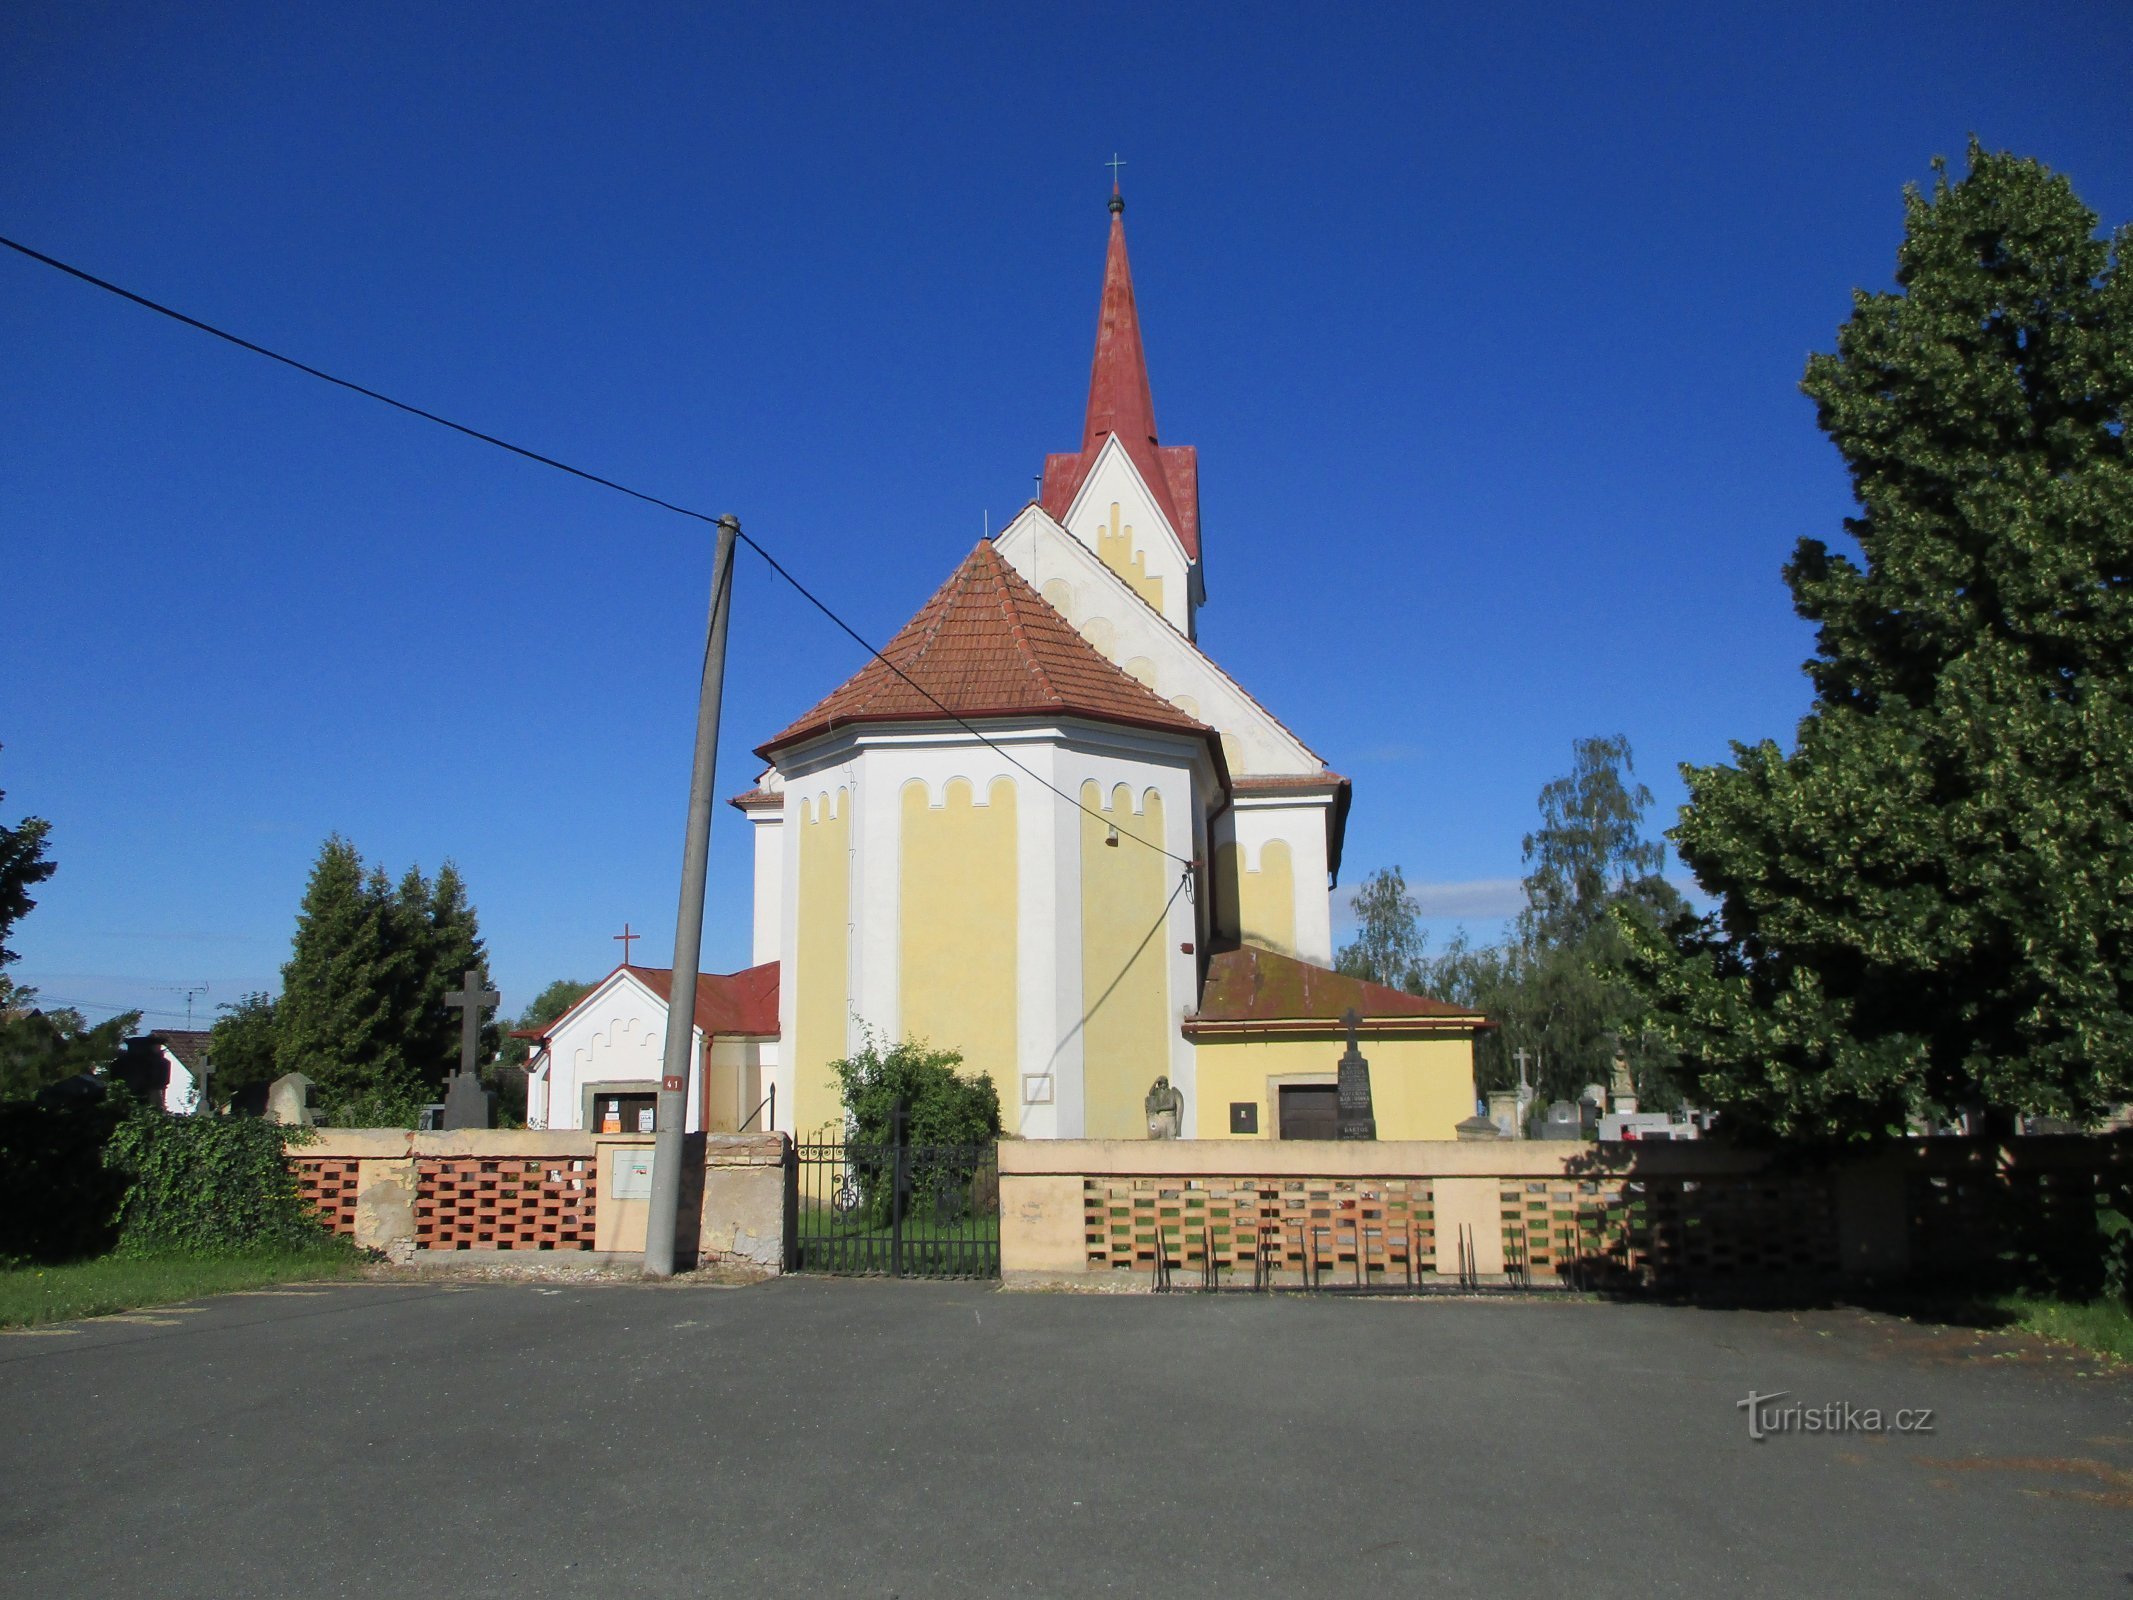 Biserica Sf. Filip și Jakub (Mlékosrby, 5.7.2020)